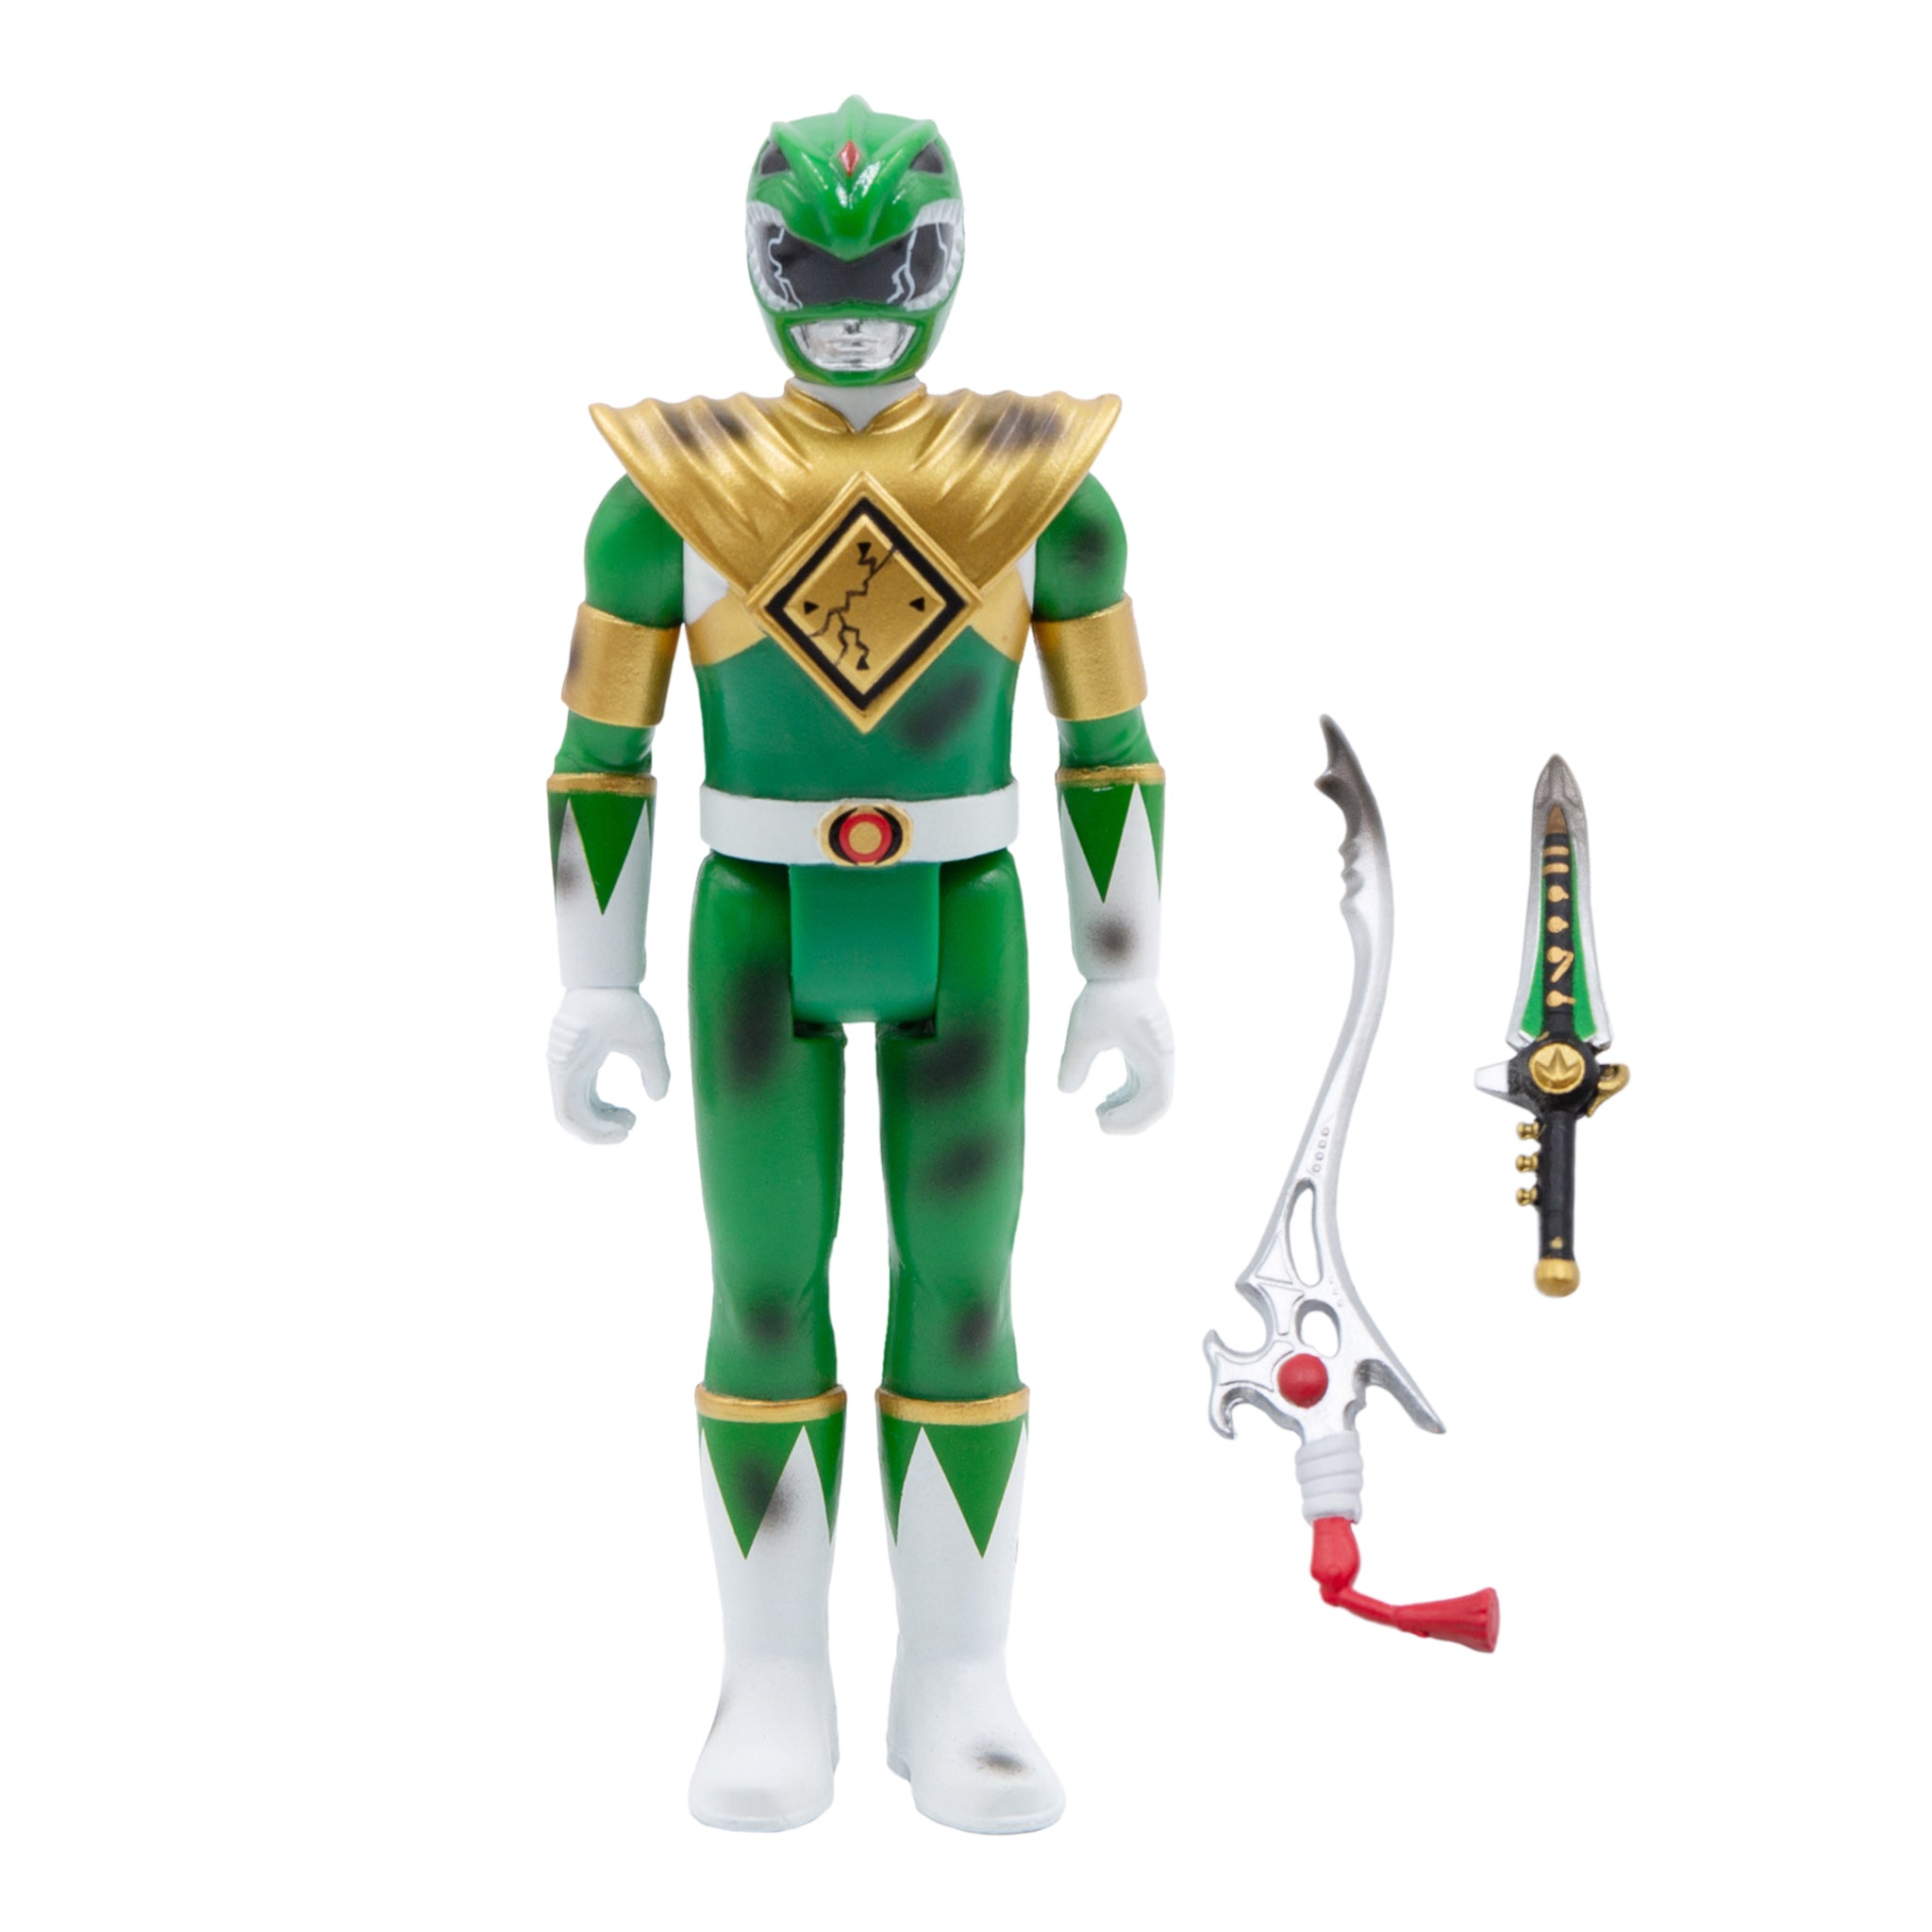 Mighty Morphin' Power Rangers Reaction Figure - Green Ranger (Battle Damaged)